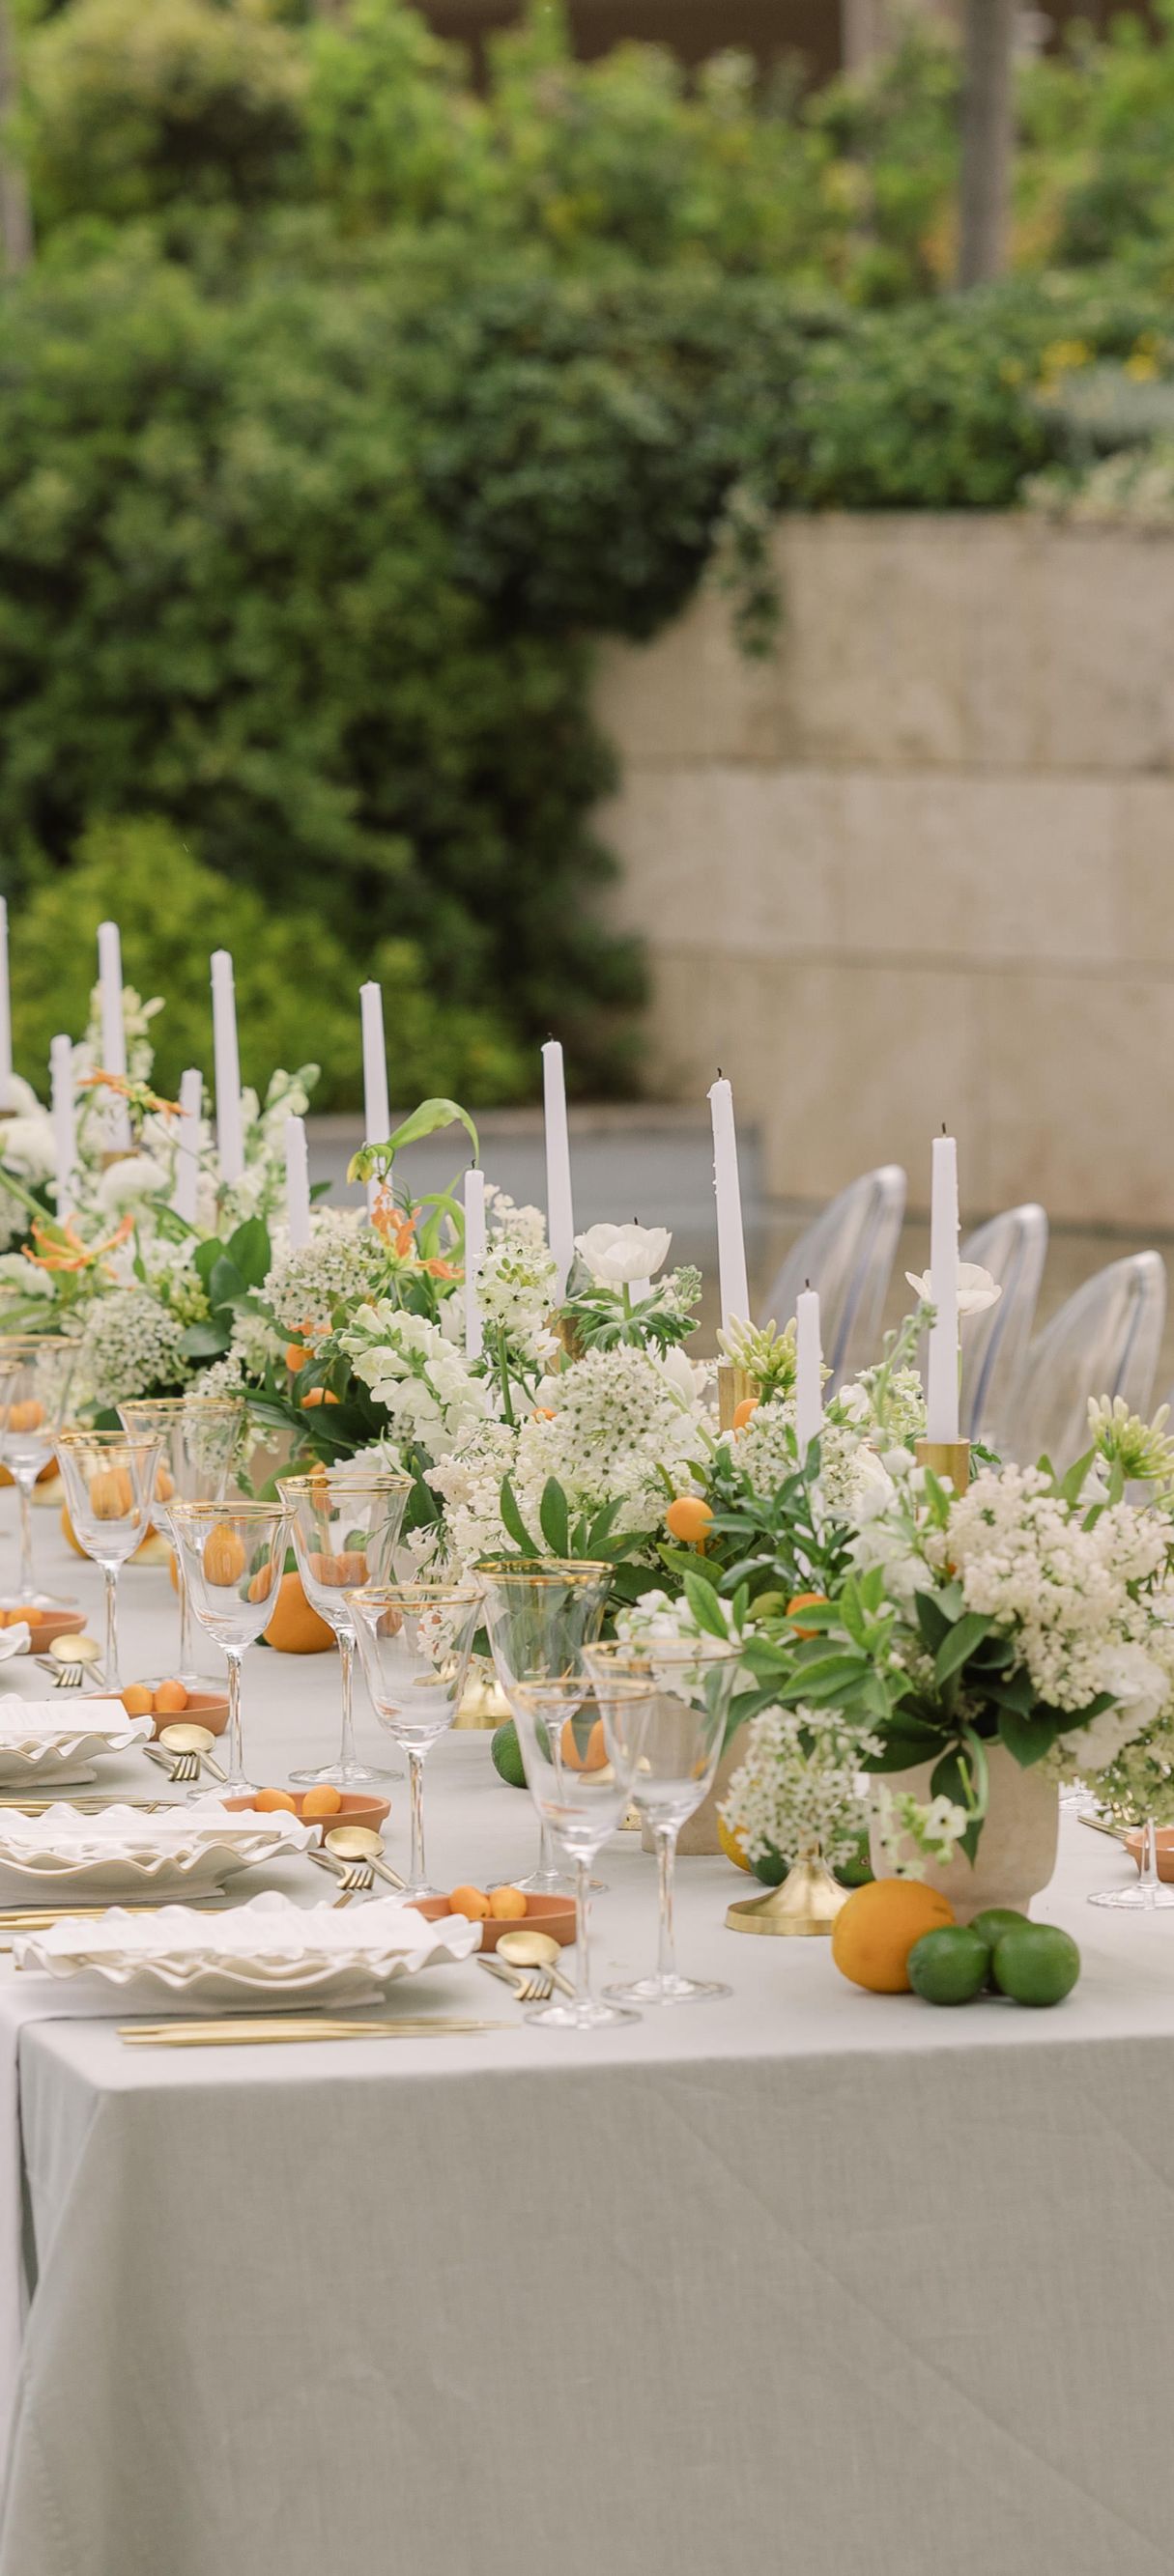 Outdoor wedding reception dinner table